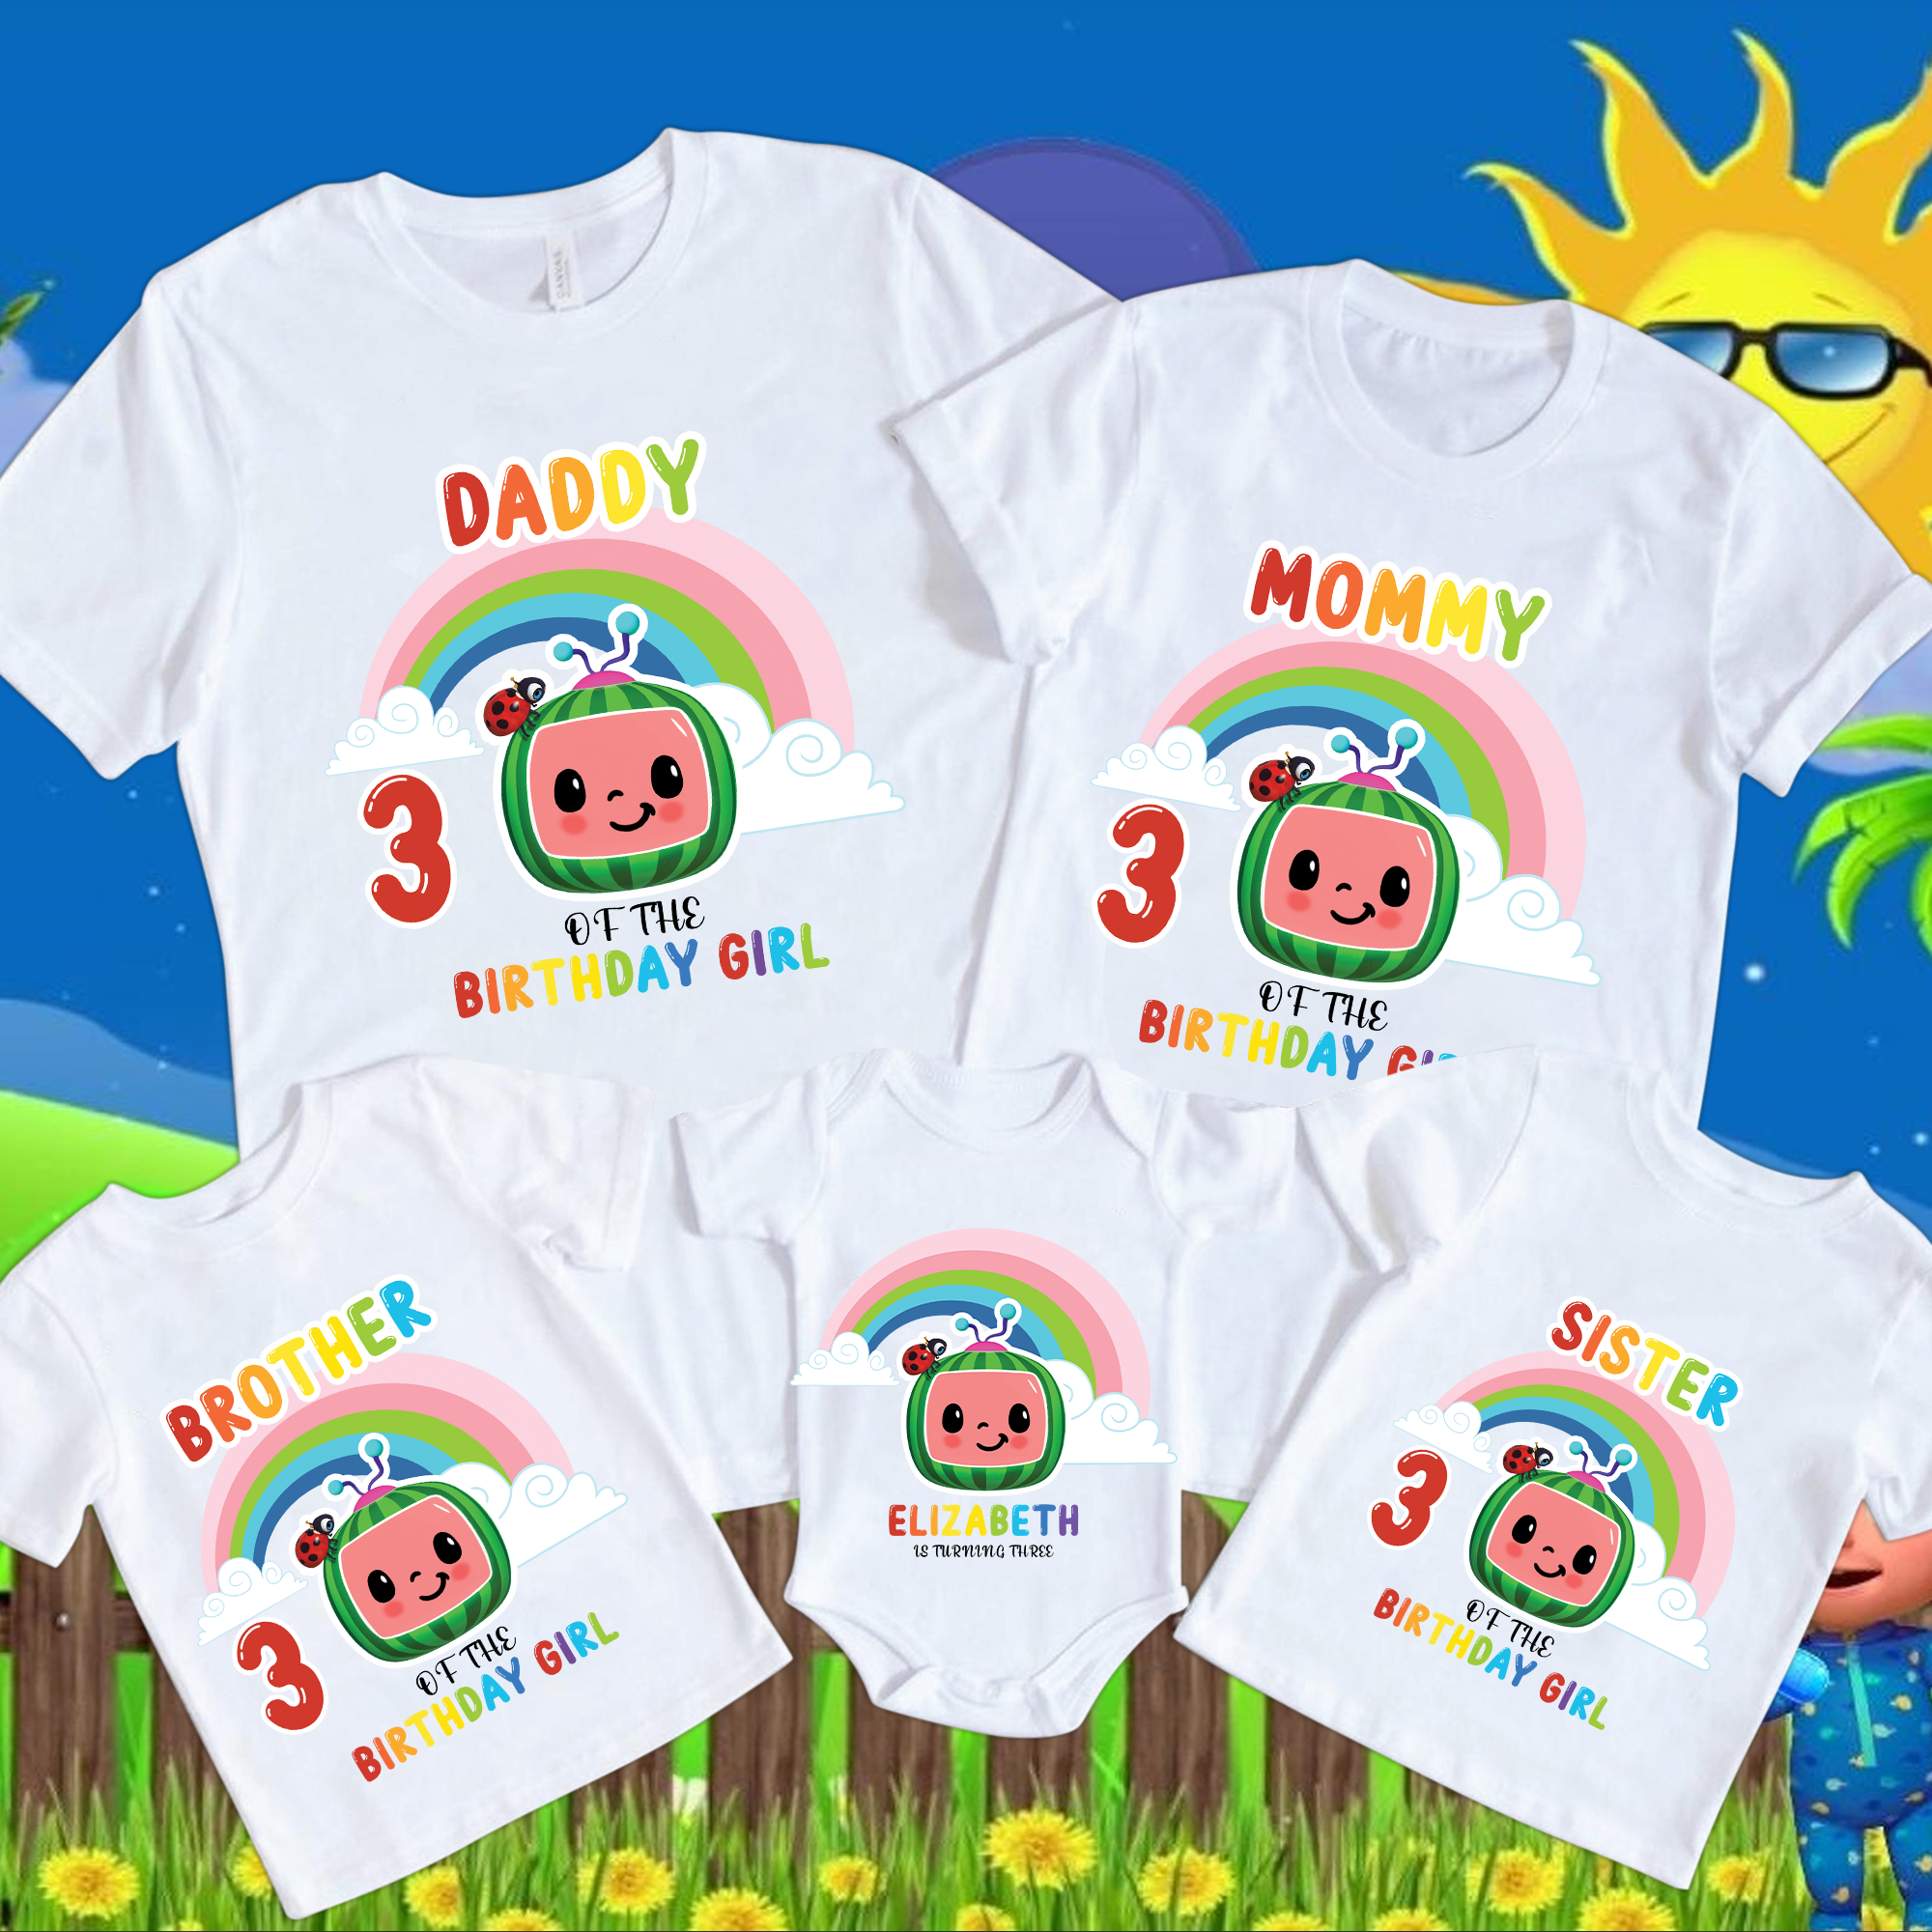 Personalized Cocomelon Birthday Shirts Set, Cocomelon Family Shirt, Cocomelon Party Shirt, Cocomelon Birthday, Family Matching, birthday boy